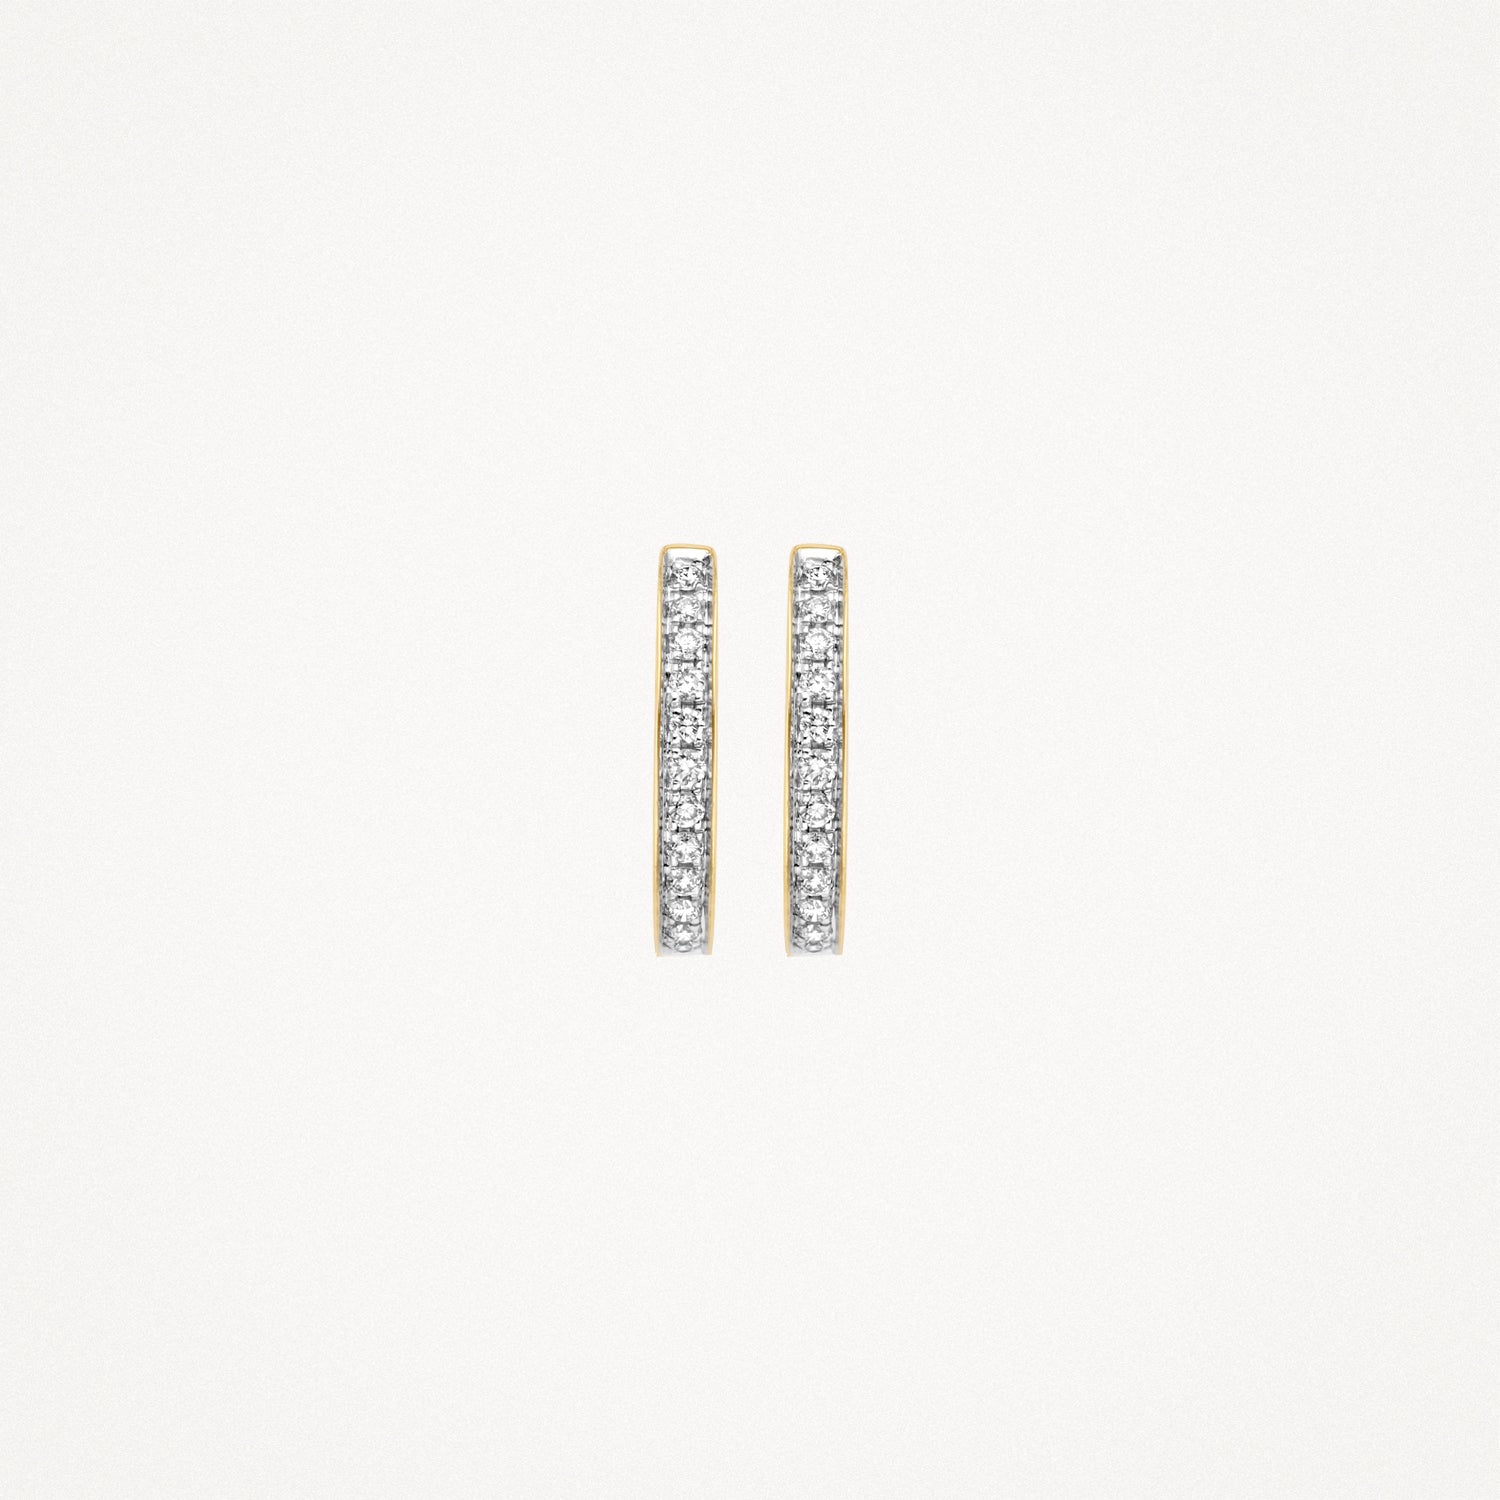 Diamond earrings 7612BDI - 14k Yellow and white gold